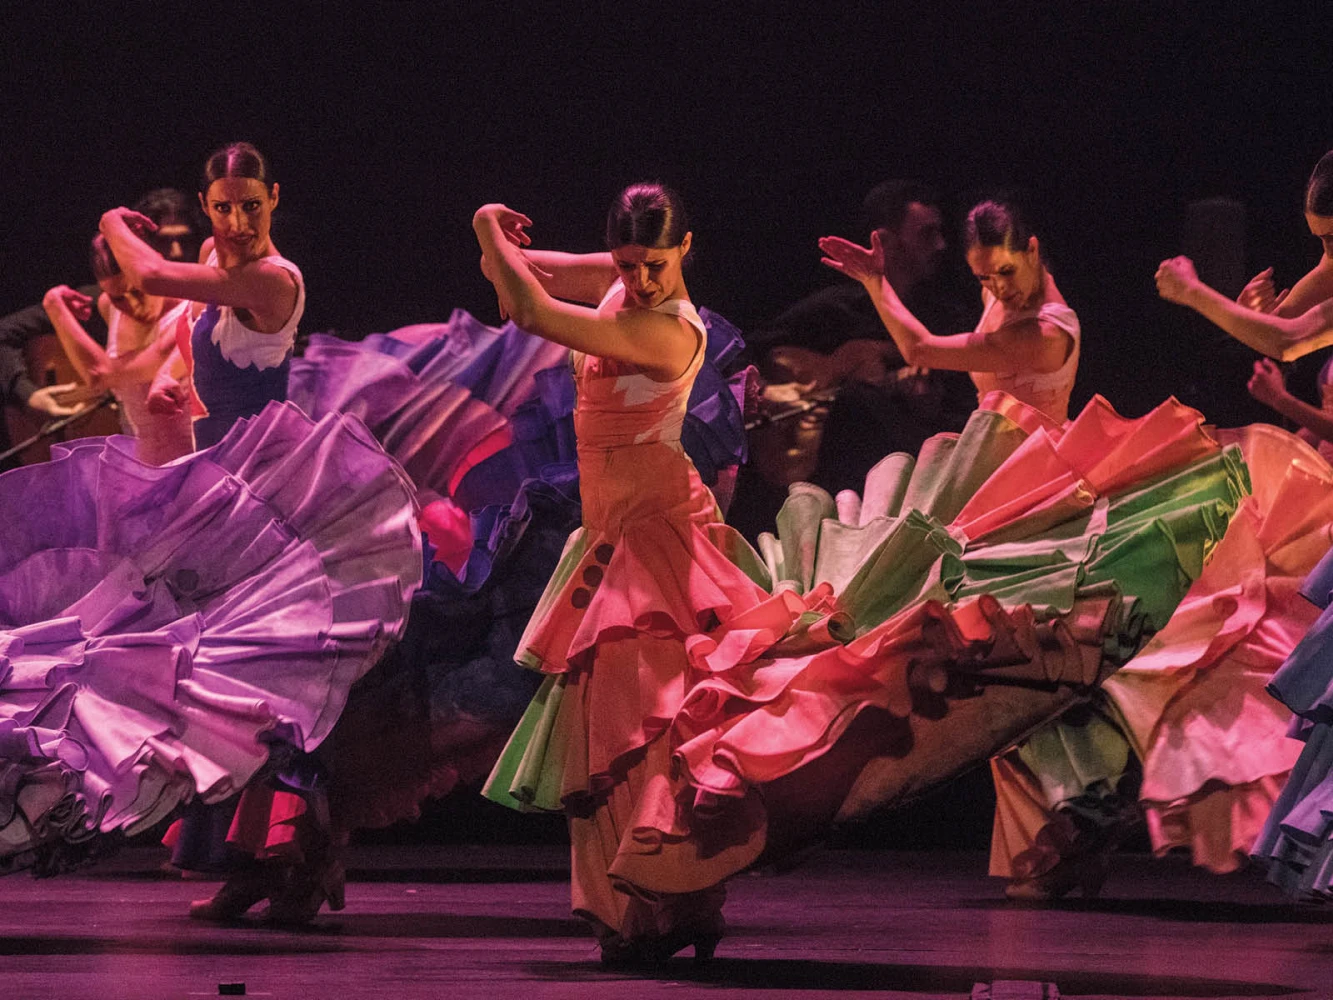 Flamenco Festival: What to expect - 3